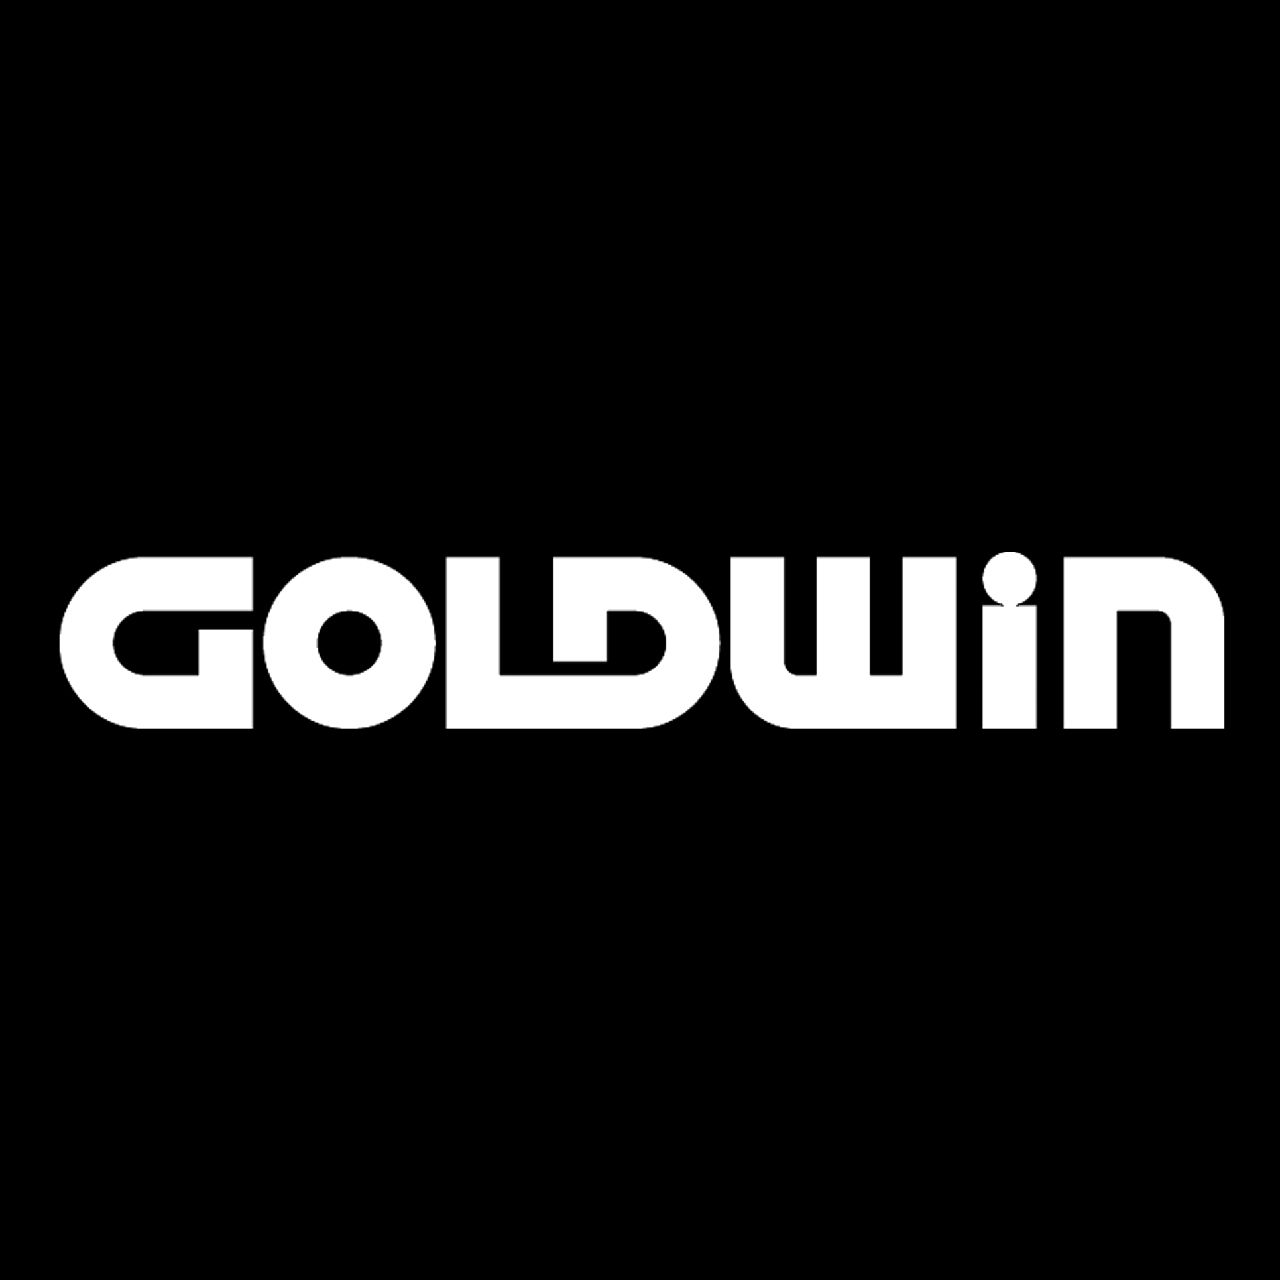 GOLDWIN